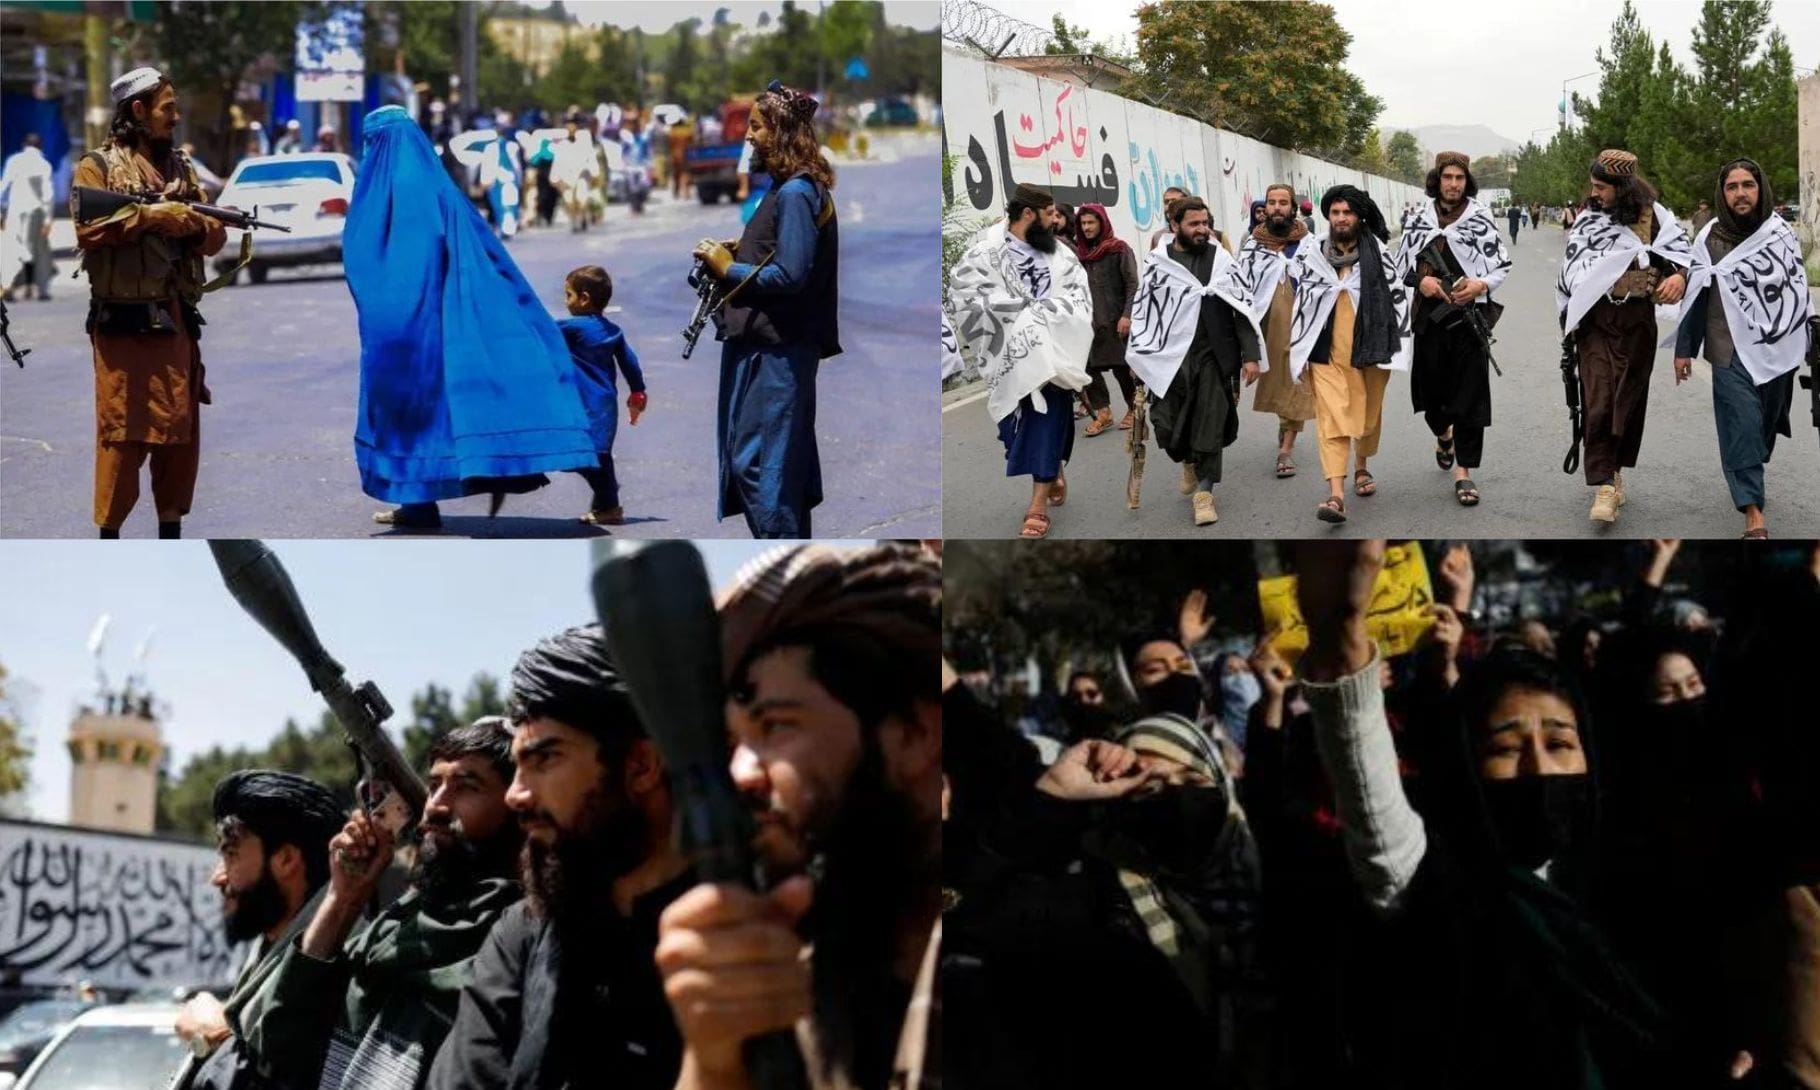 UN Report: Taliban’s Harsh Rules Create Fear, Target Women